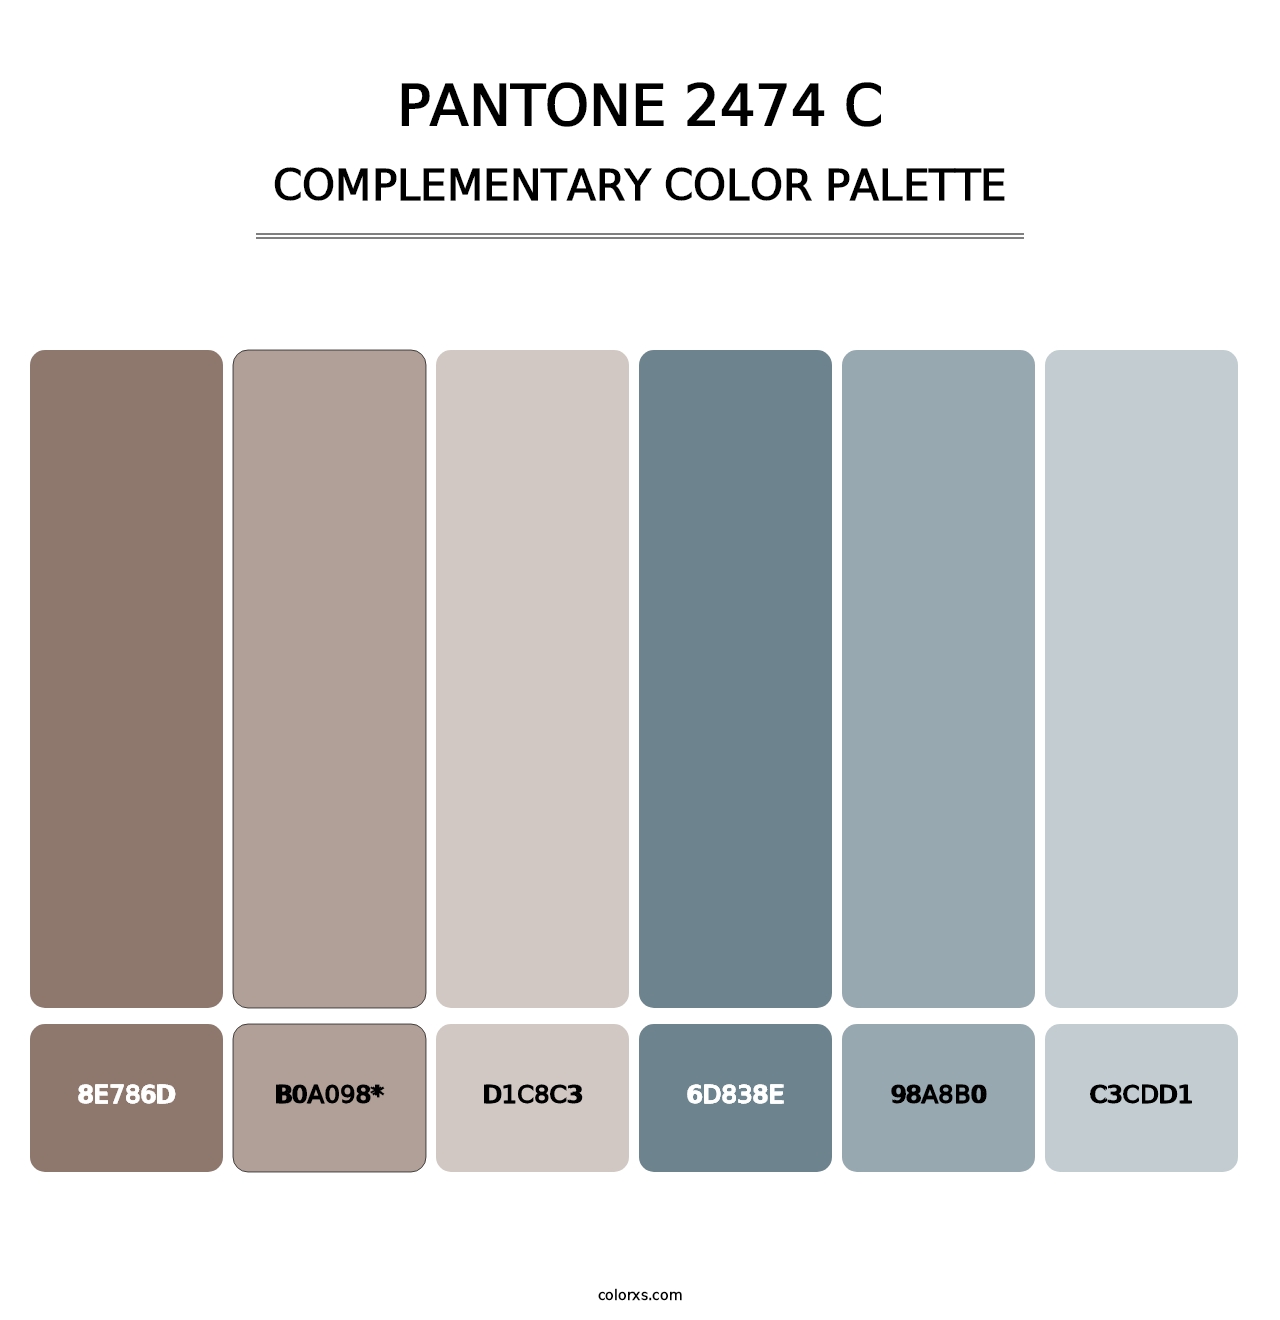 PANTONE 2474 C - Complementary Color Palette